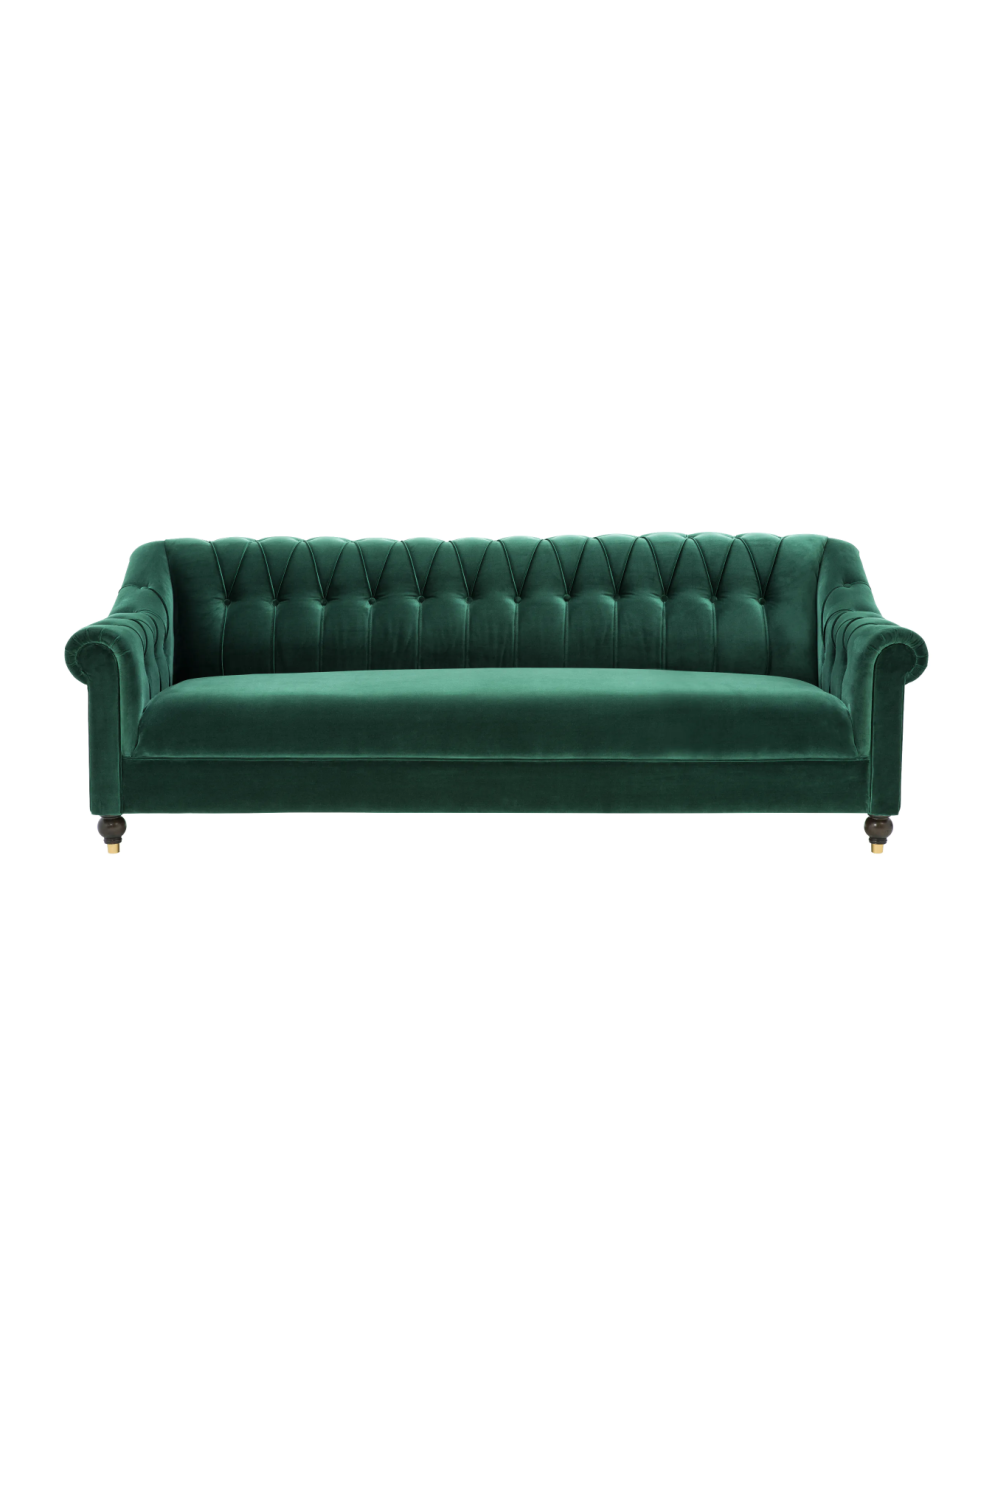 Green Tufted Sofa | Eichholtz Brian | Oroa.com